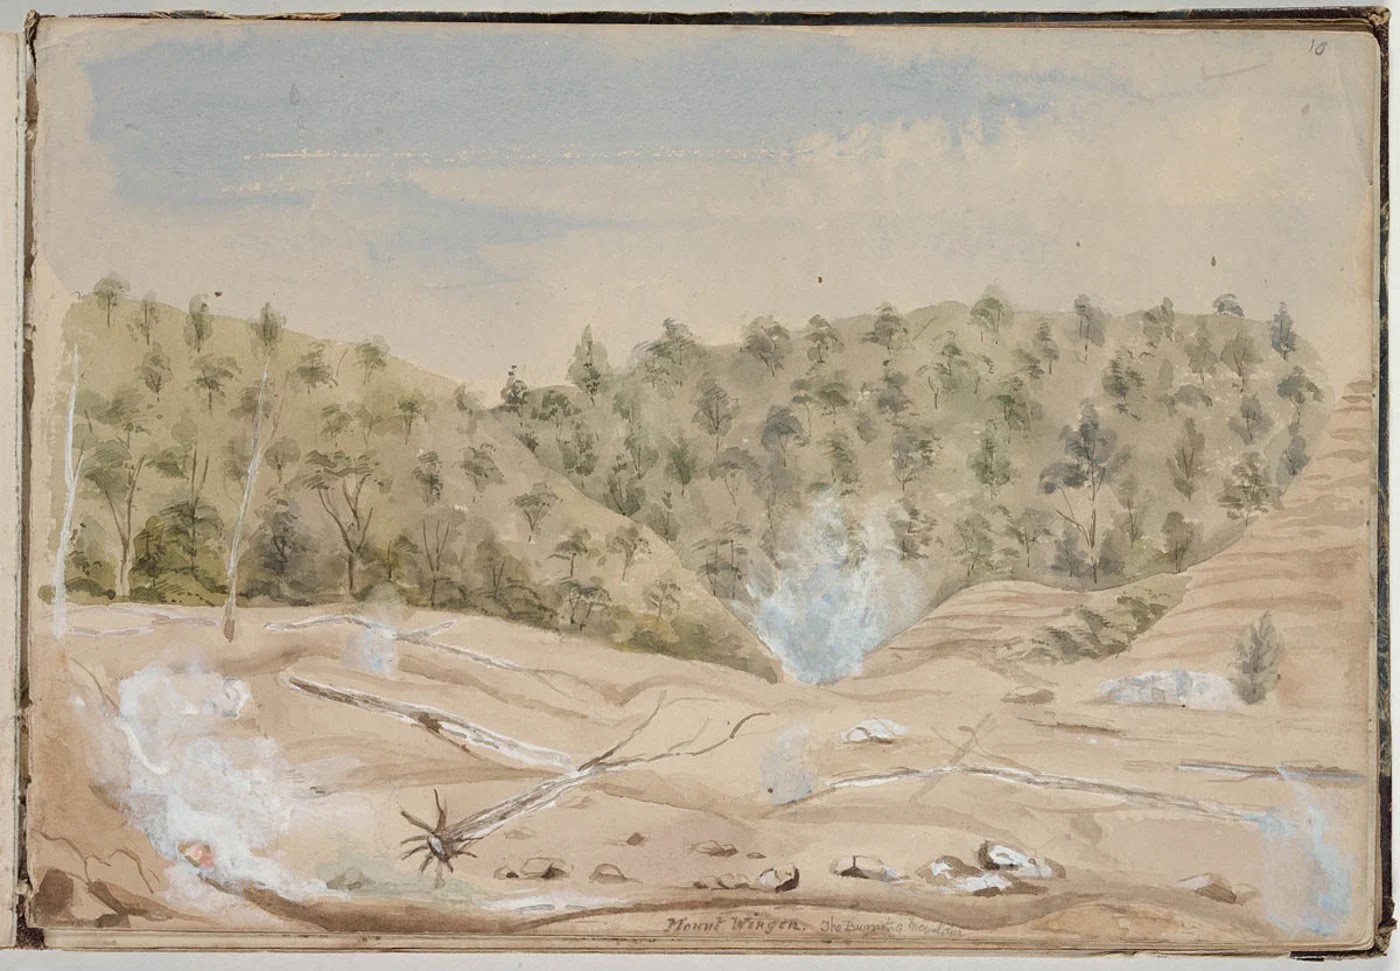 Painting of Burning Mountain 1833-1915